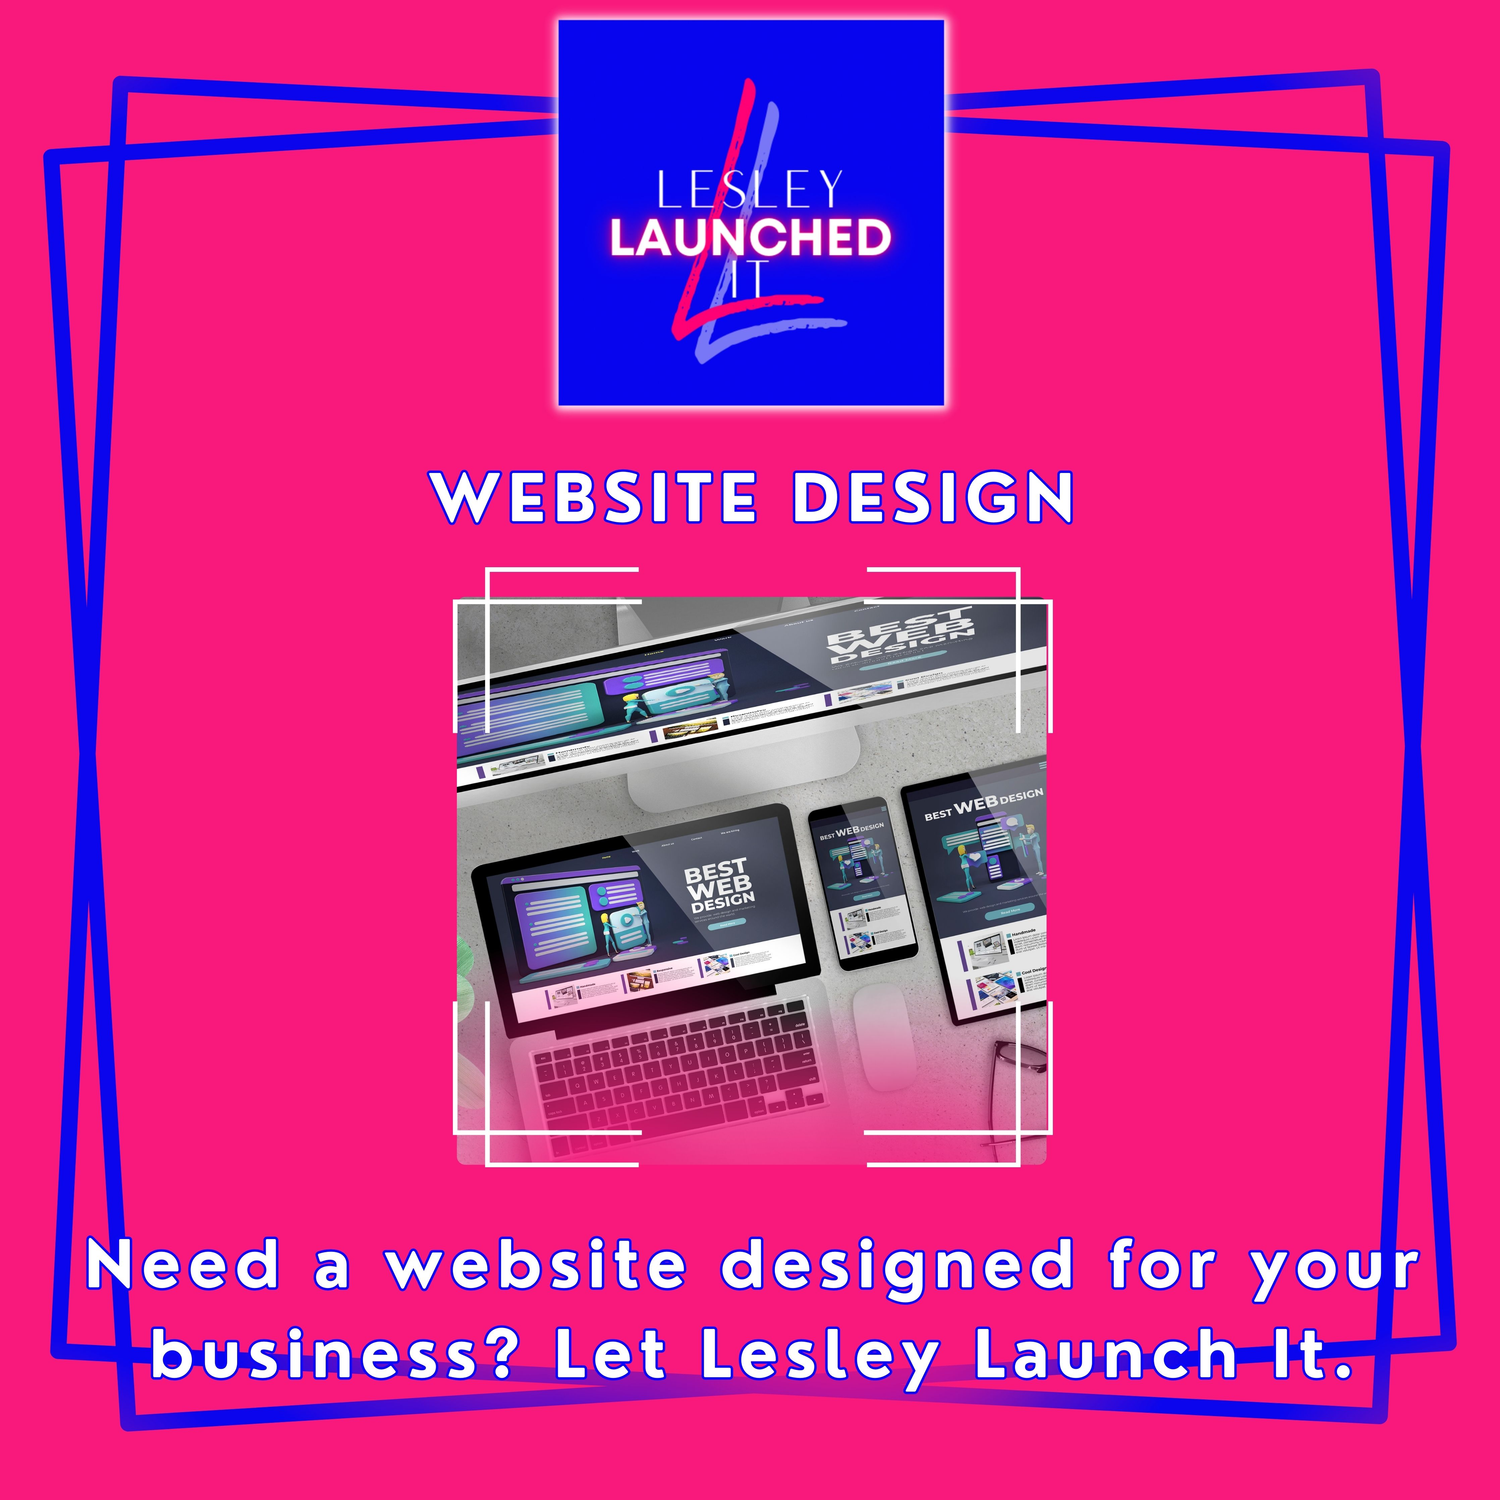 Lesley Launched It Web Design Services